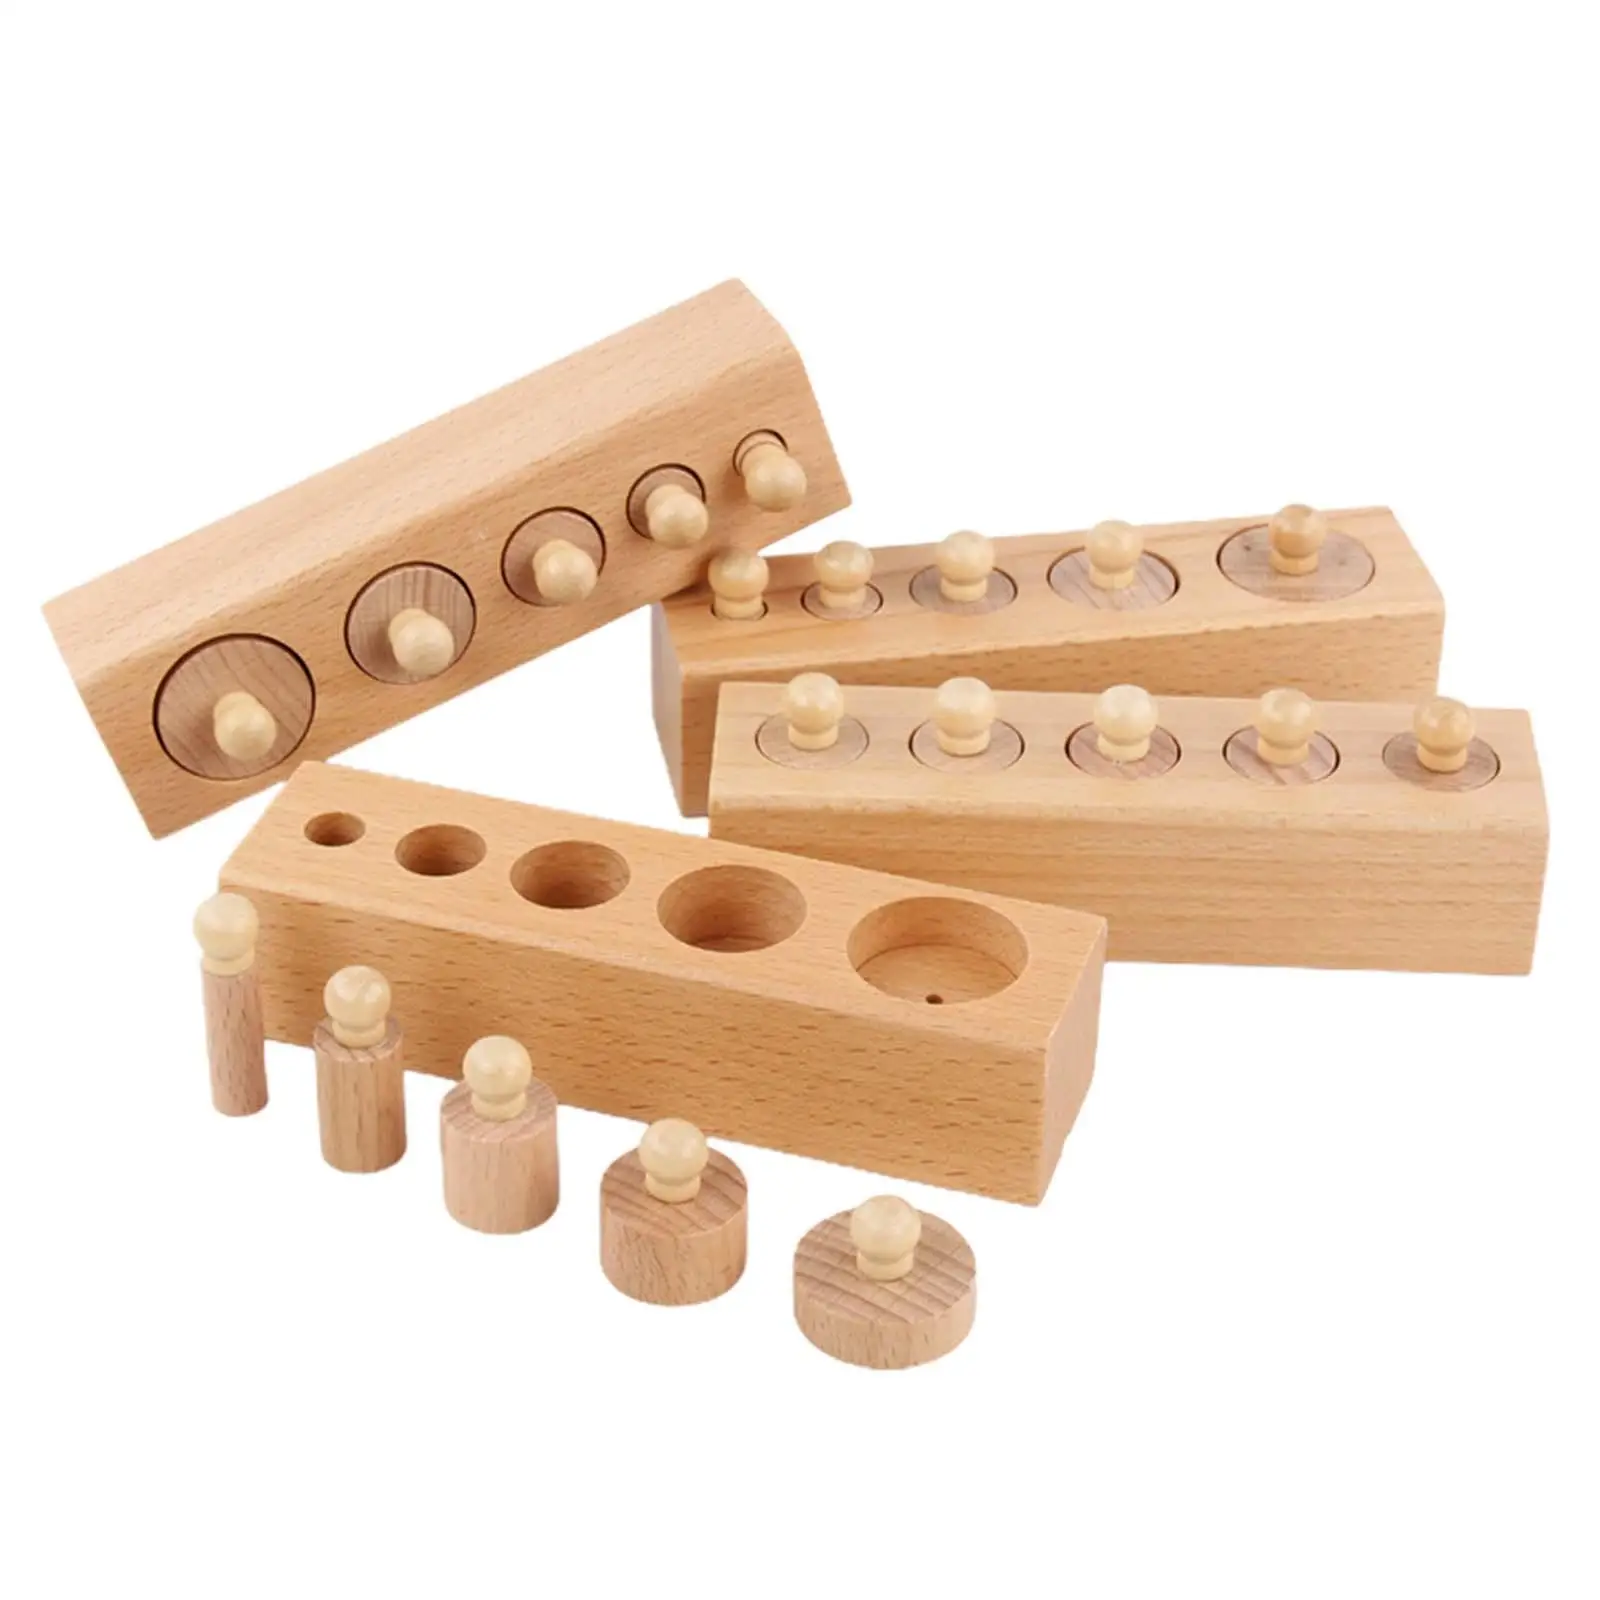 4x Wooden Knob Log Cylinder Blocks Board Game Patterning Educational Cylinder Ladder Blocks for Home Preschool Toys School Kids